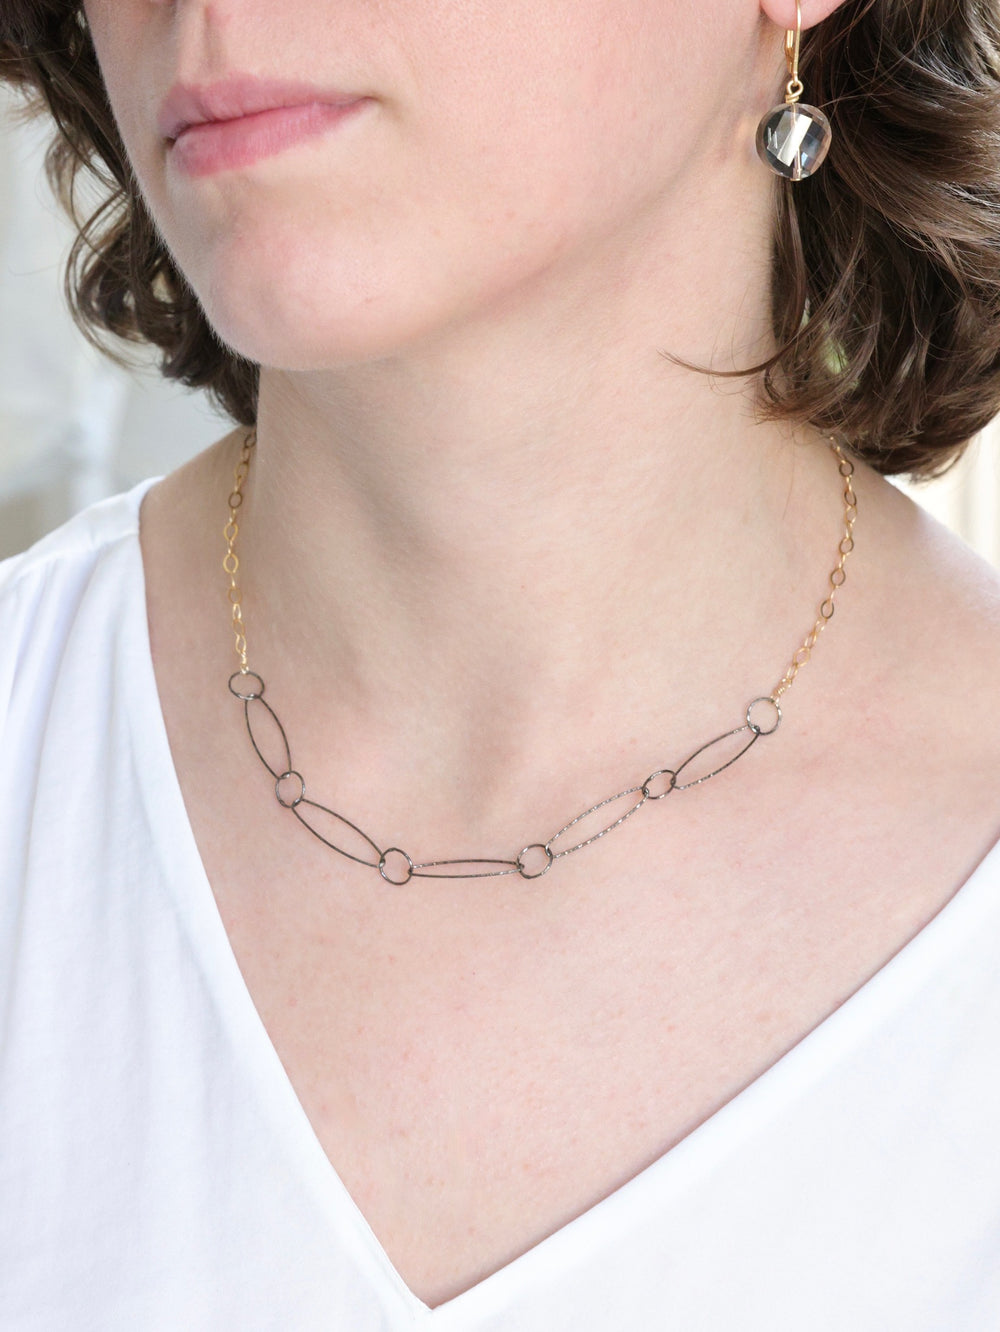 5 links nh necklace -Black & Gold